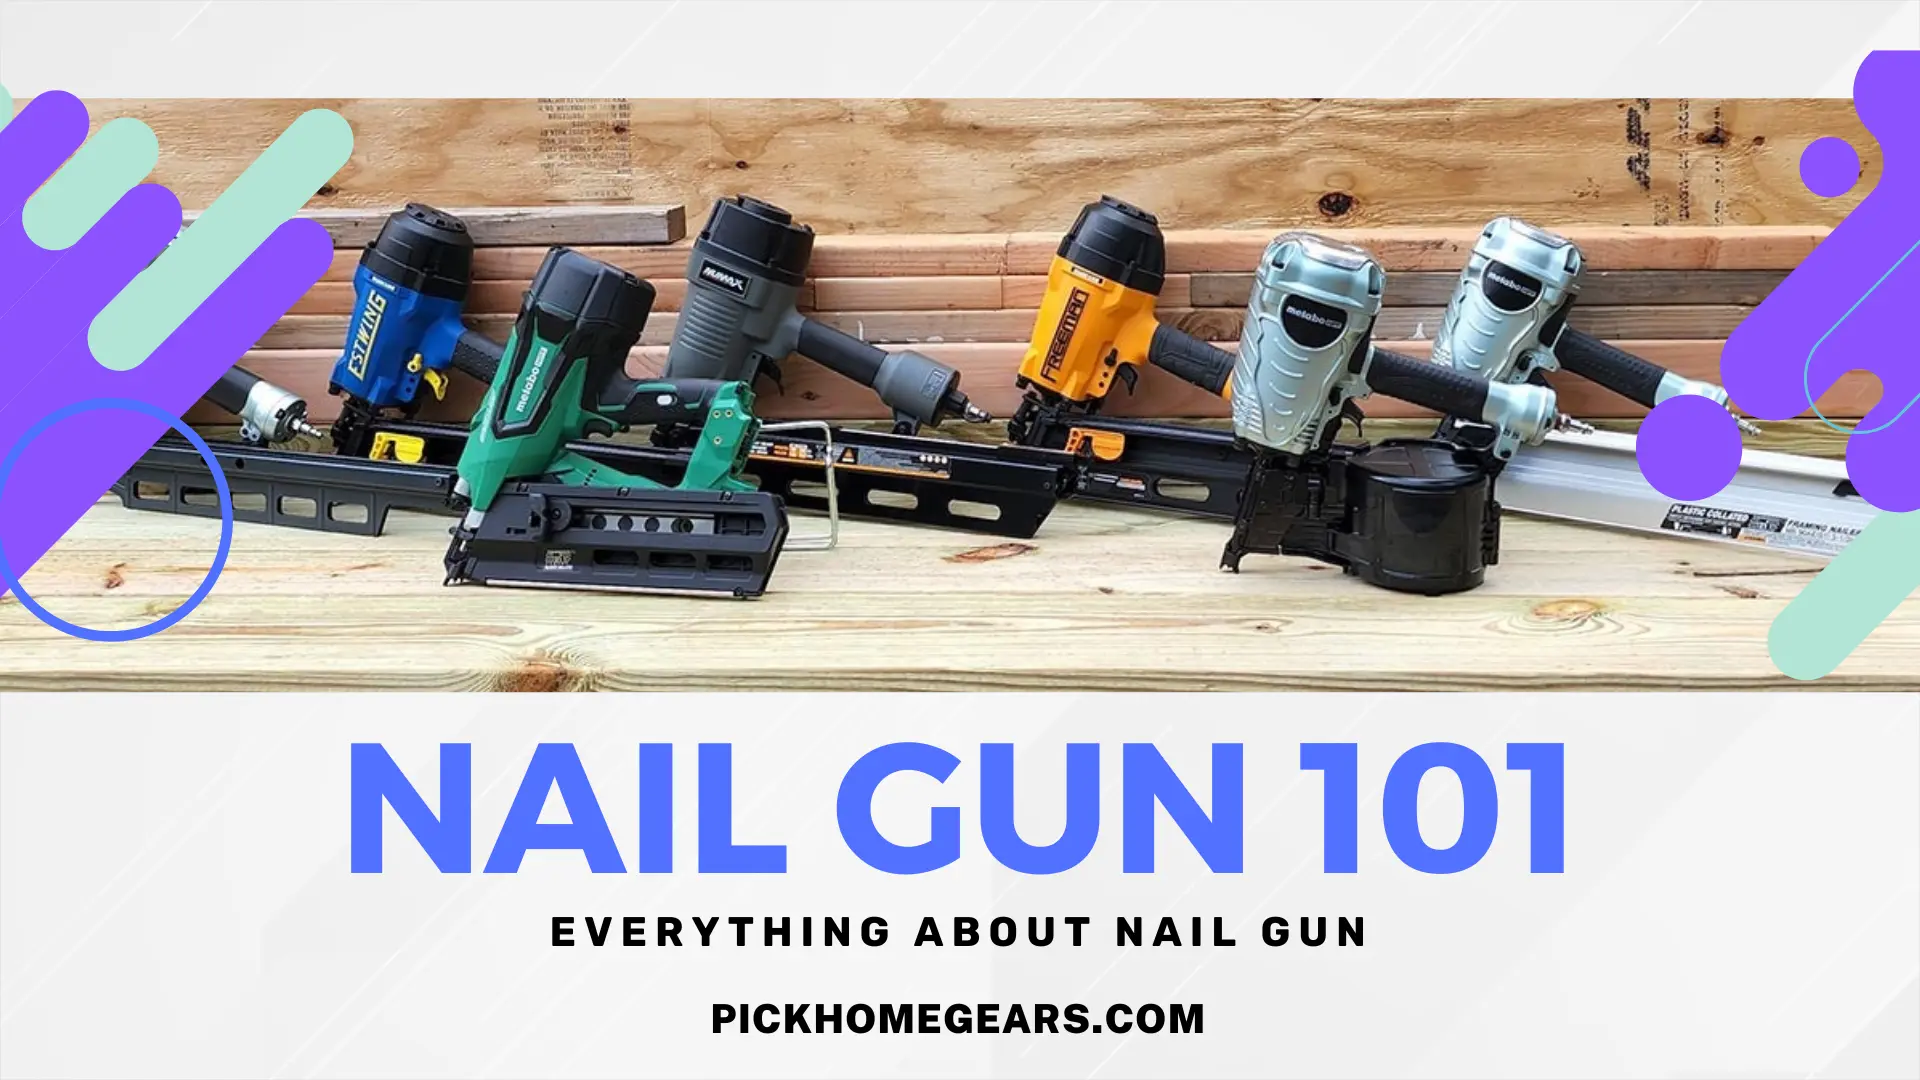 Nail Gun 101